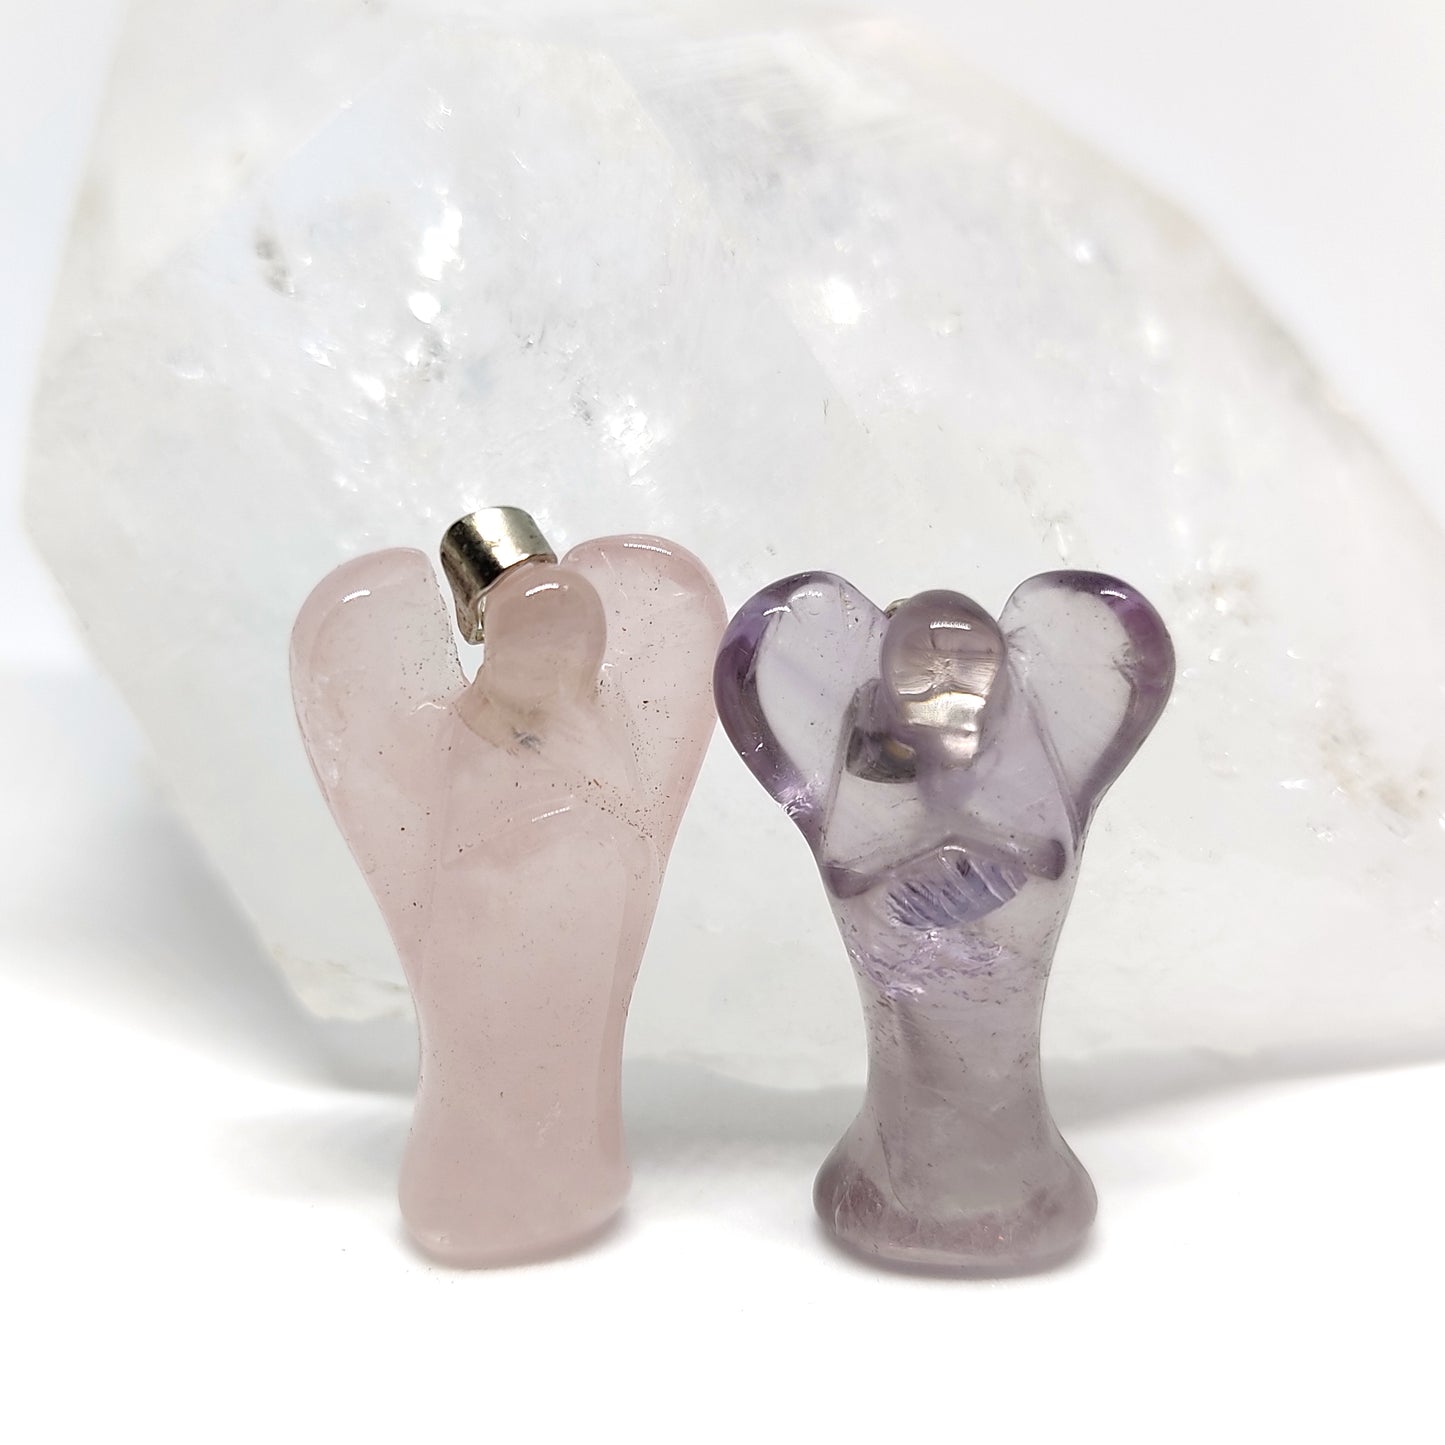 Rose Quartz Angel Pendant and Amethyst Angel Pendant - Gemstone Gift Set 1.25"